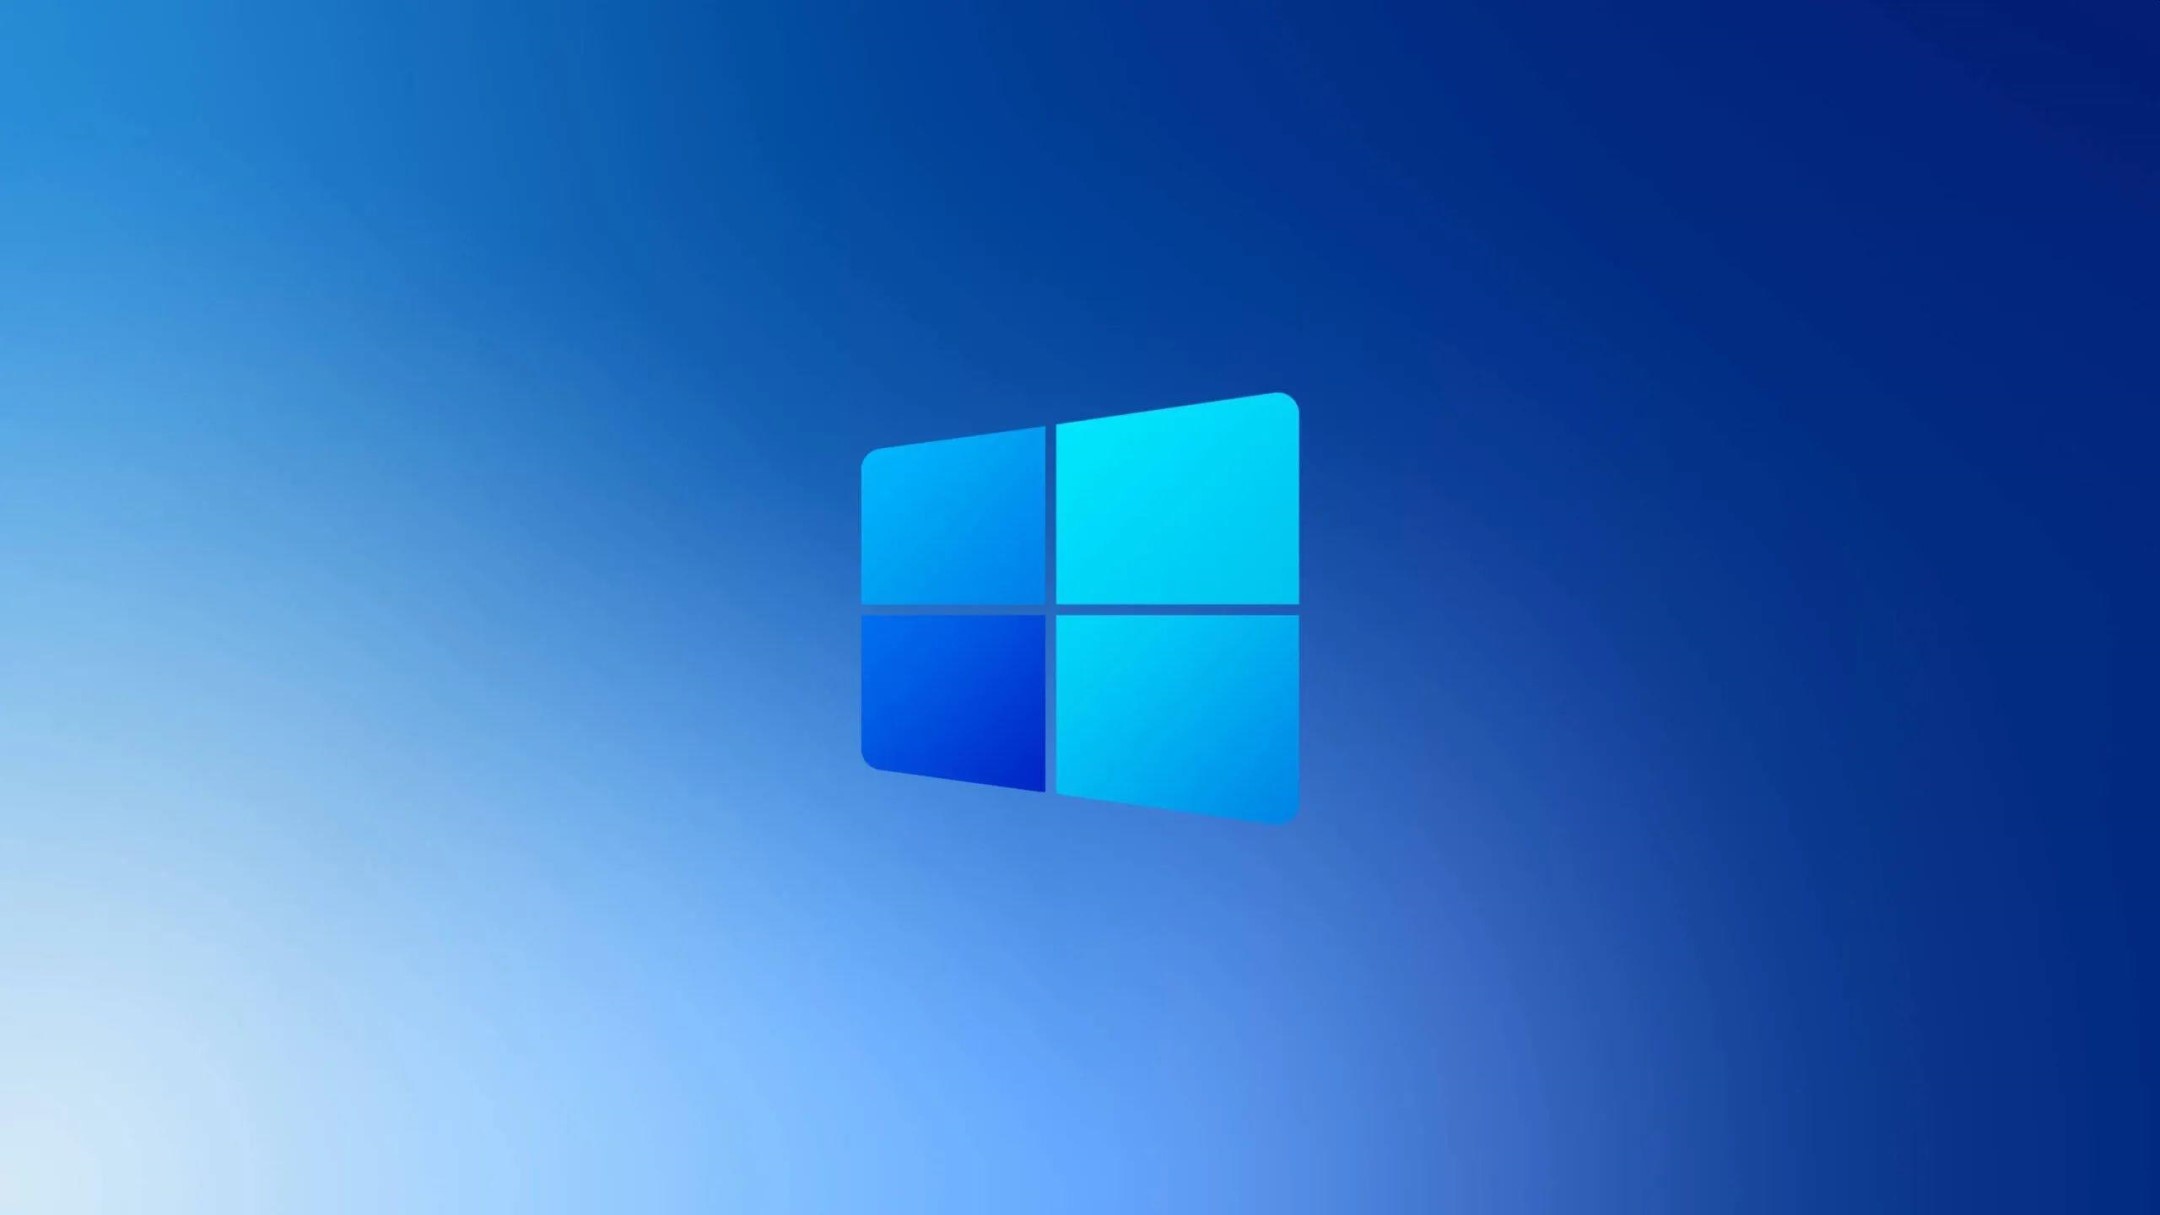 Windows 11 modern stylized logo